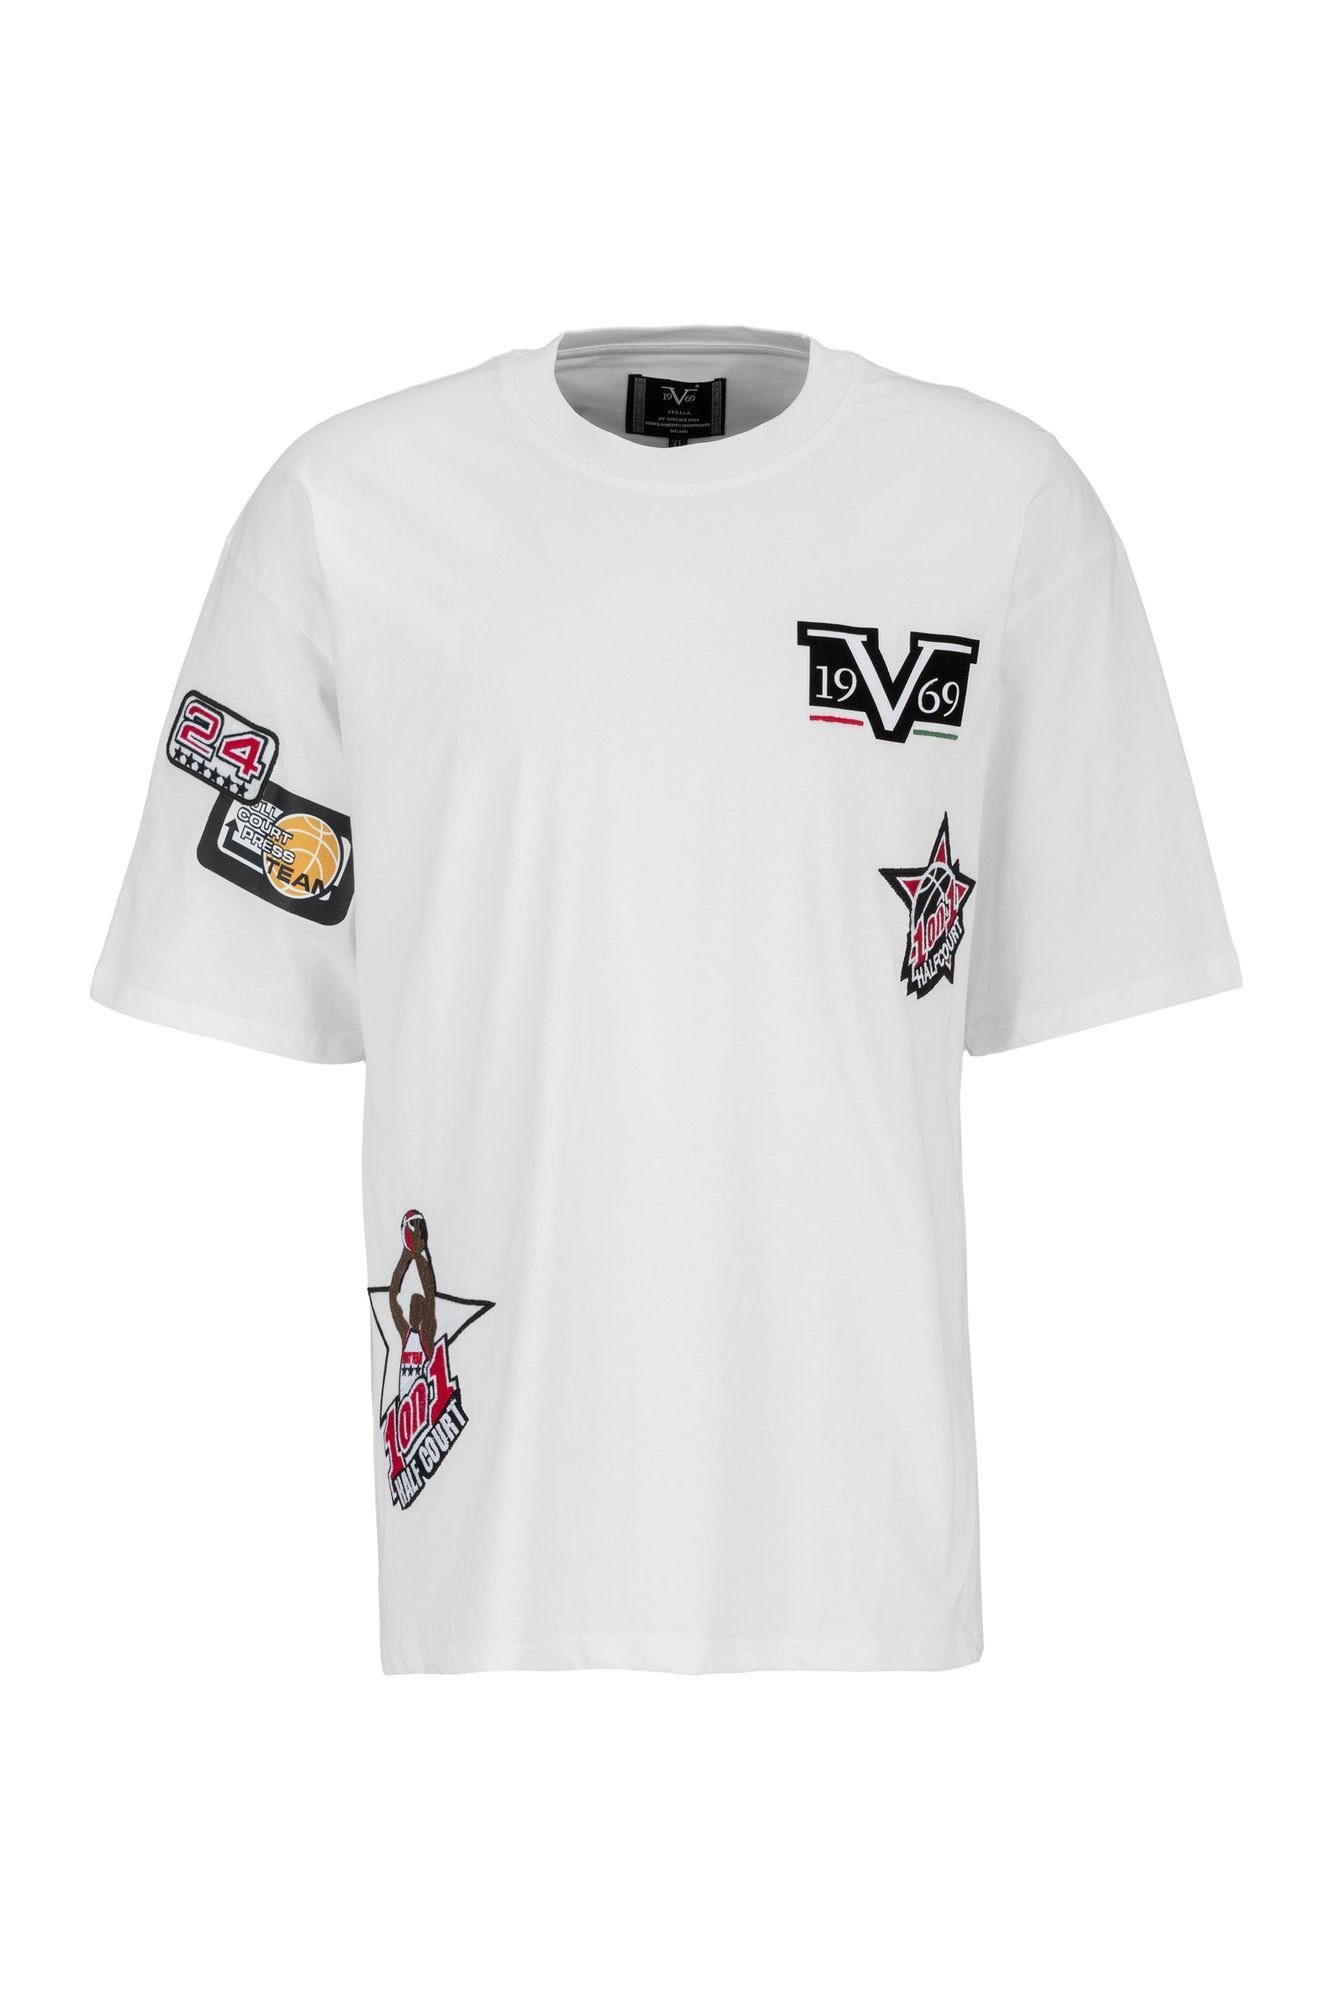 19V69 Italia by Versace T-Shirt Folani WHITE | T-Shirts